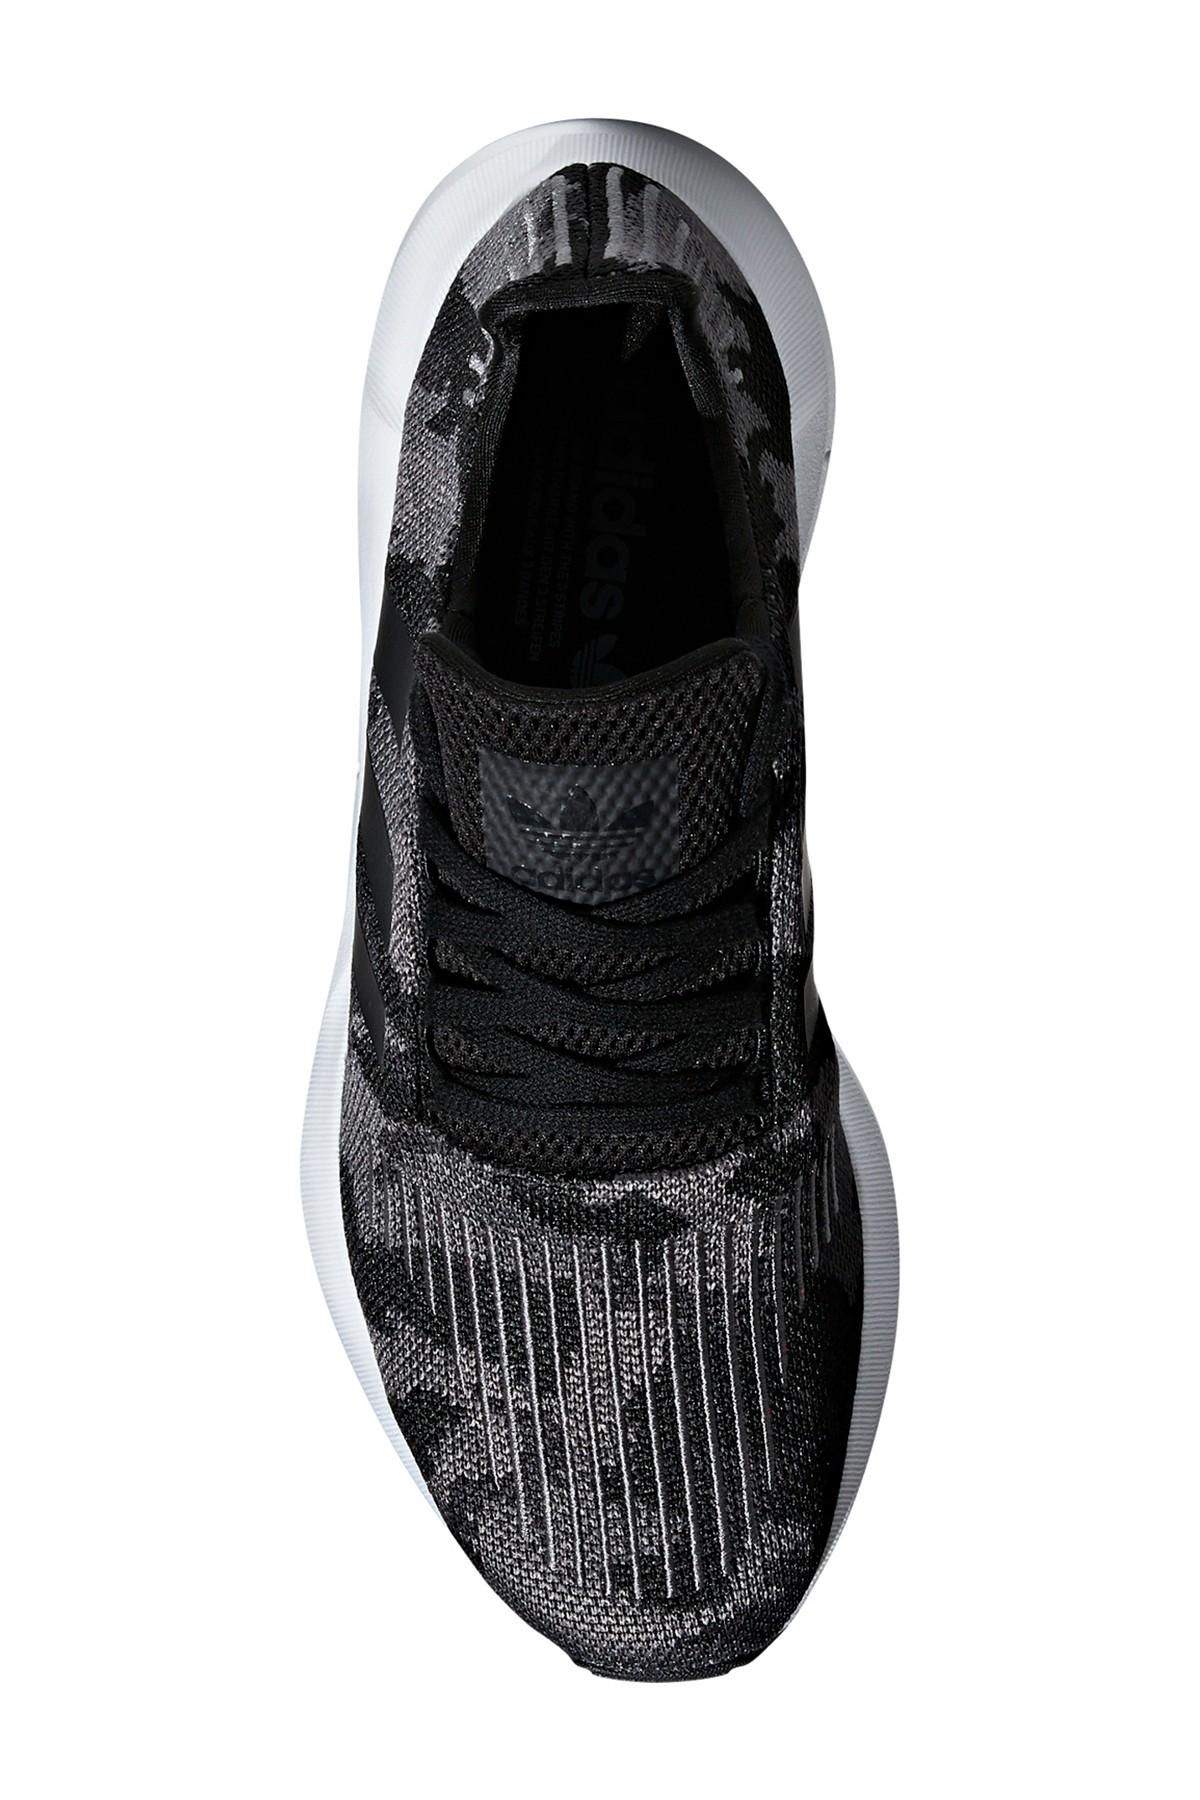 adidas Lace Swift Run Core Black Camo Mens Shoes for Men - Lyst